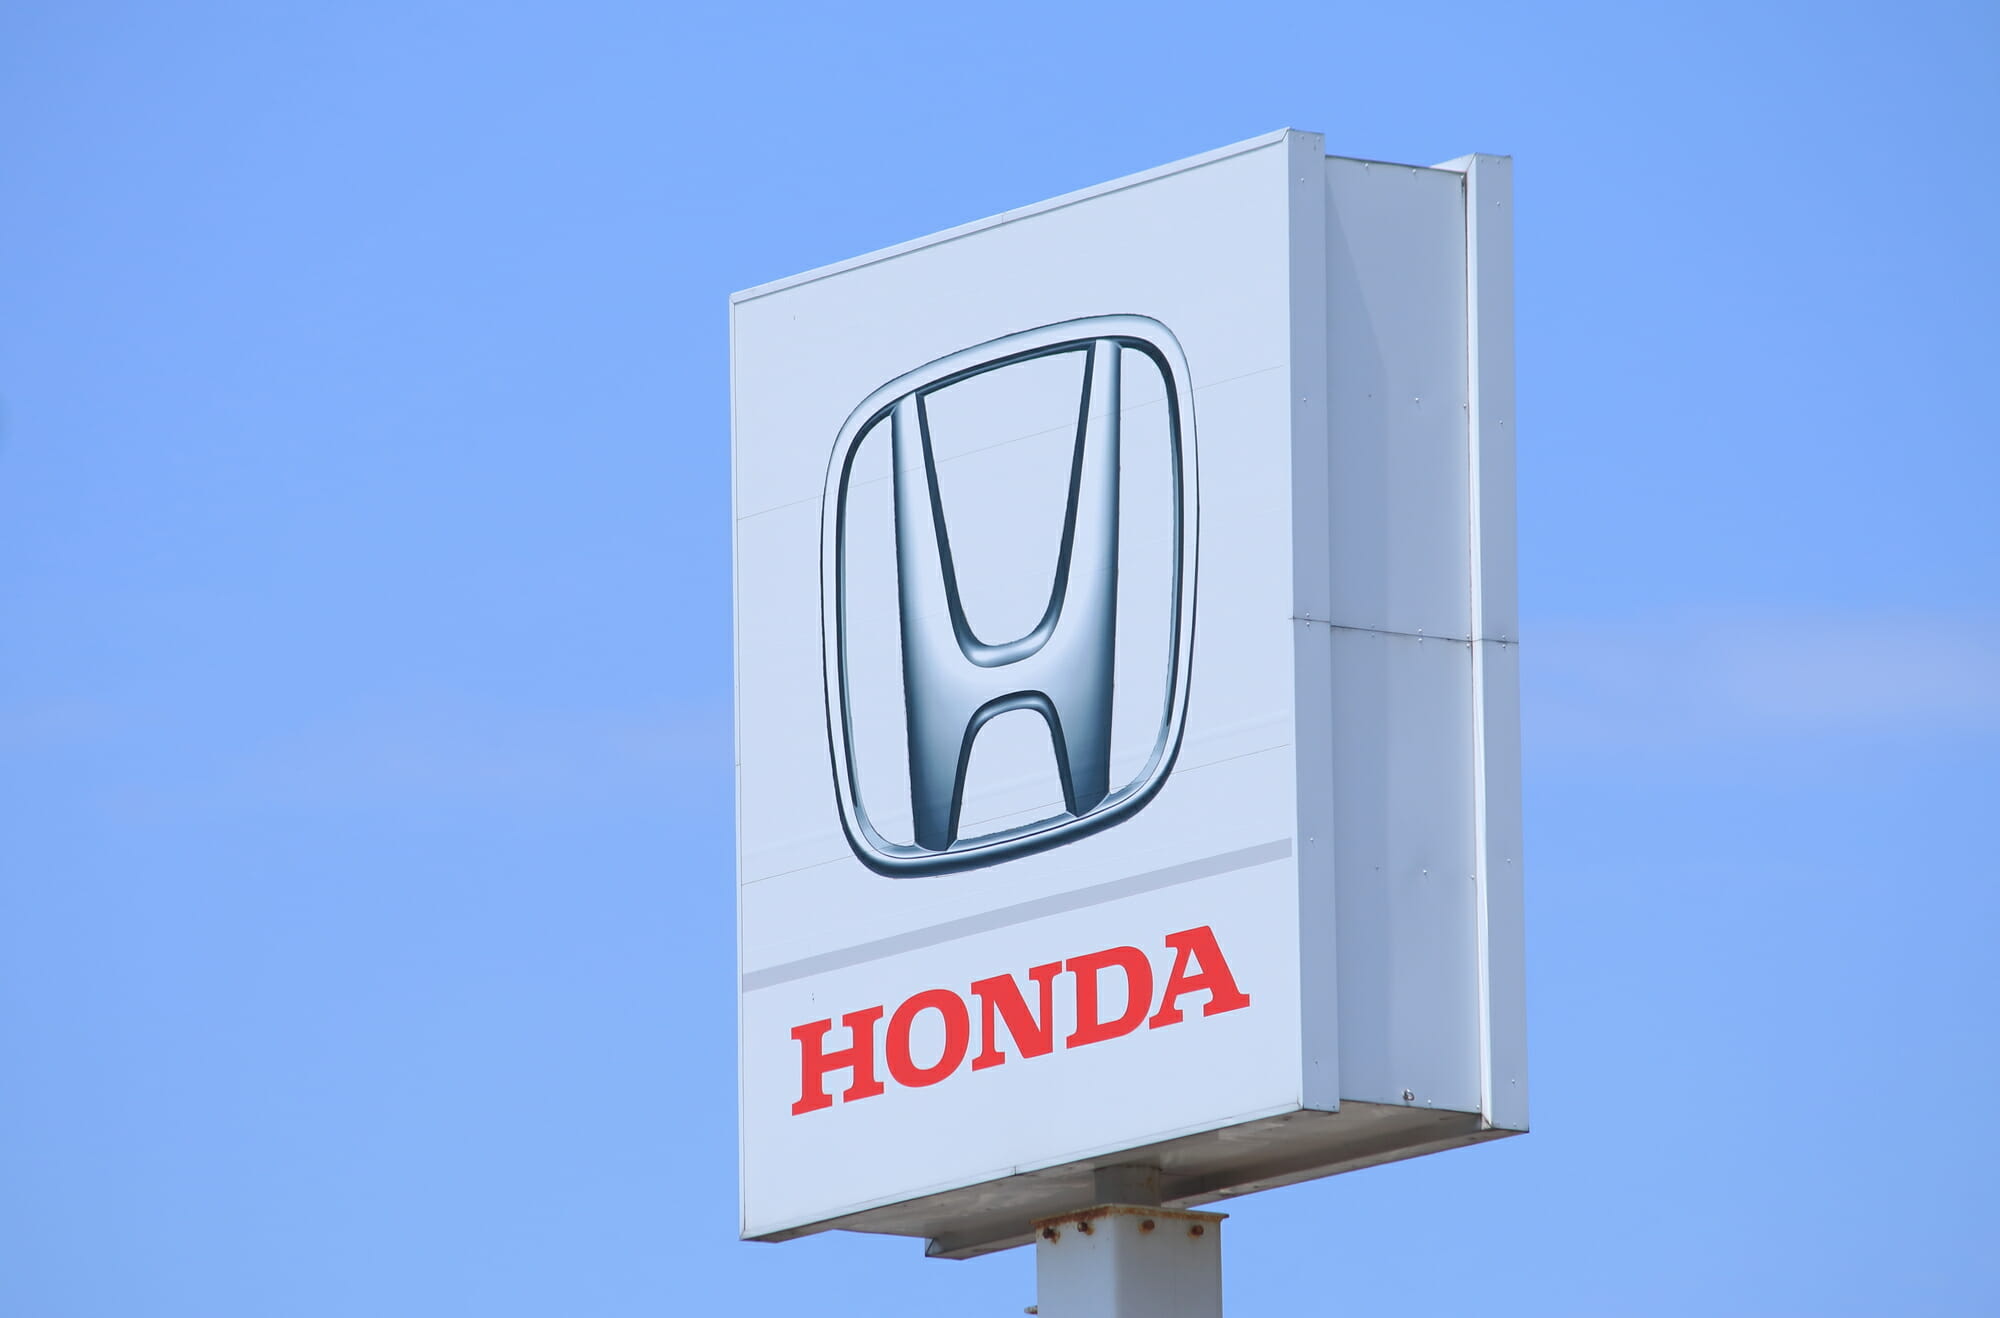 Honda Odyssey Tires: The Best Options